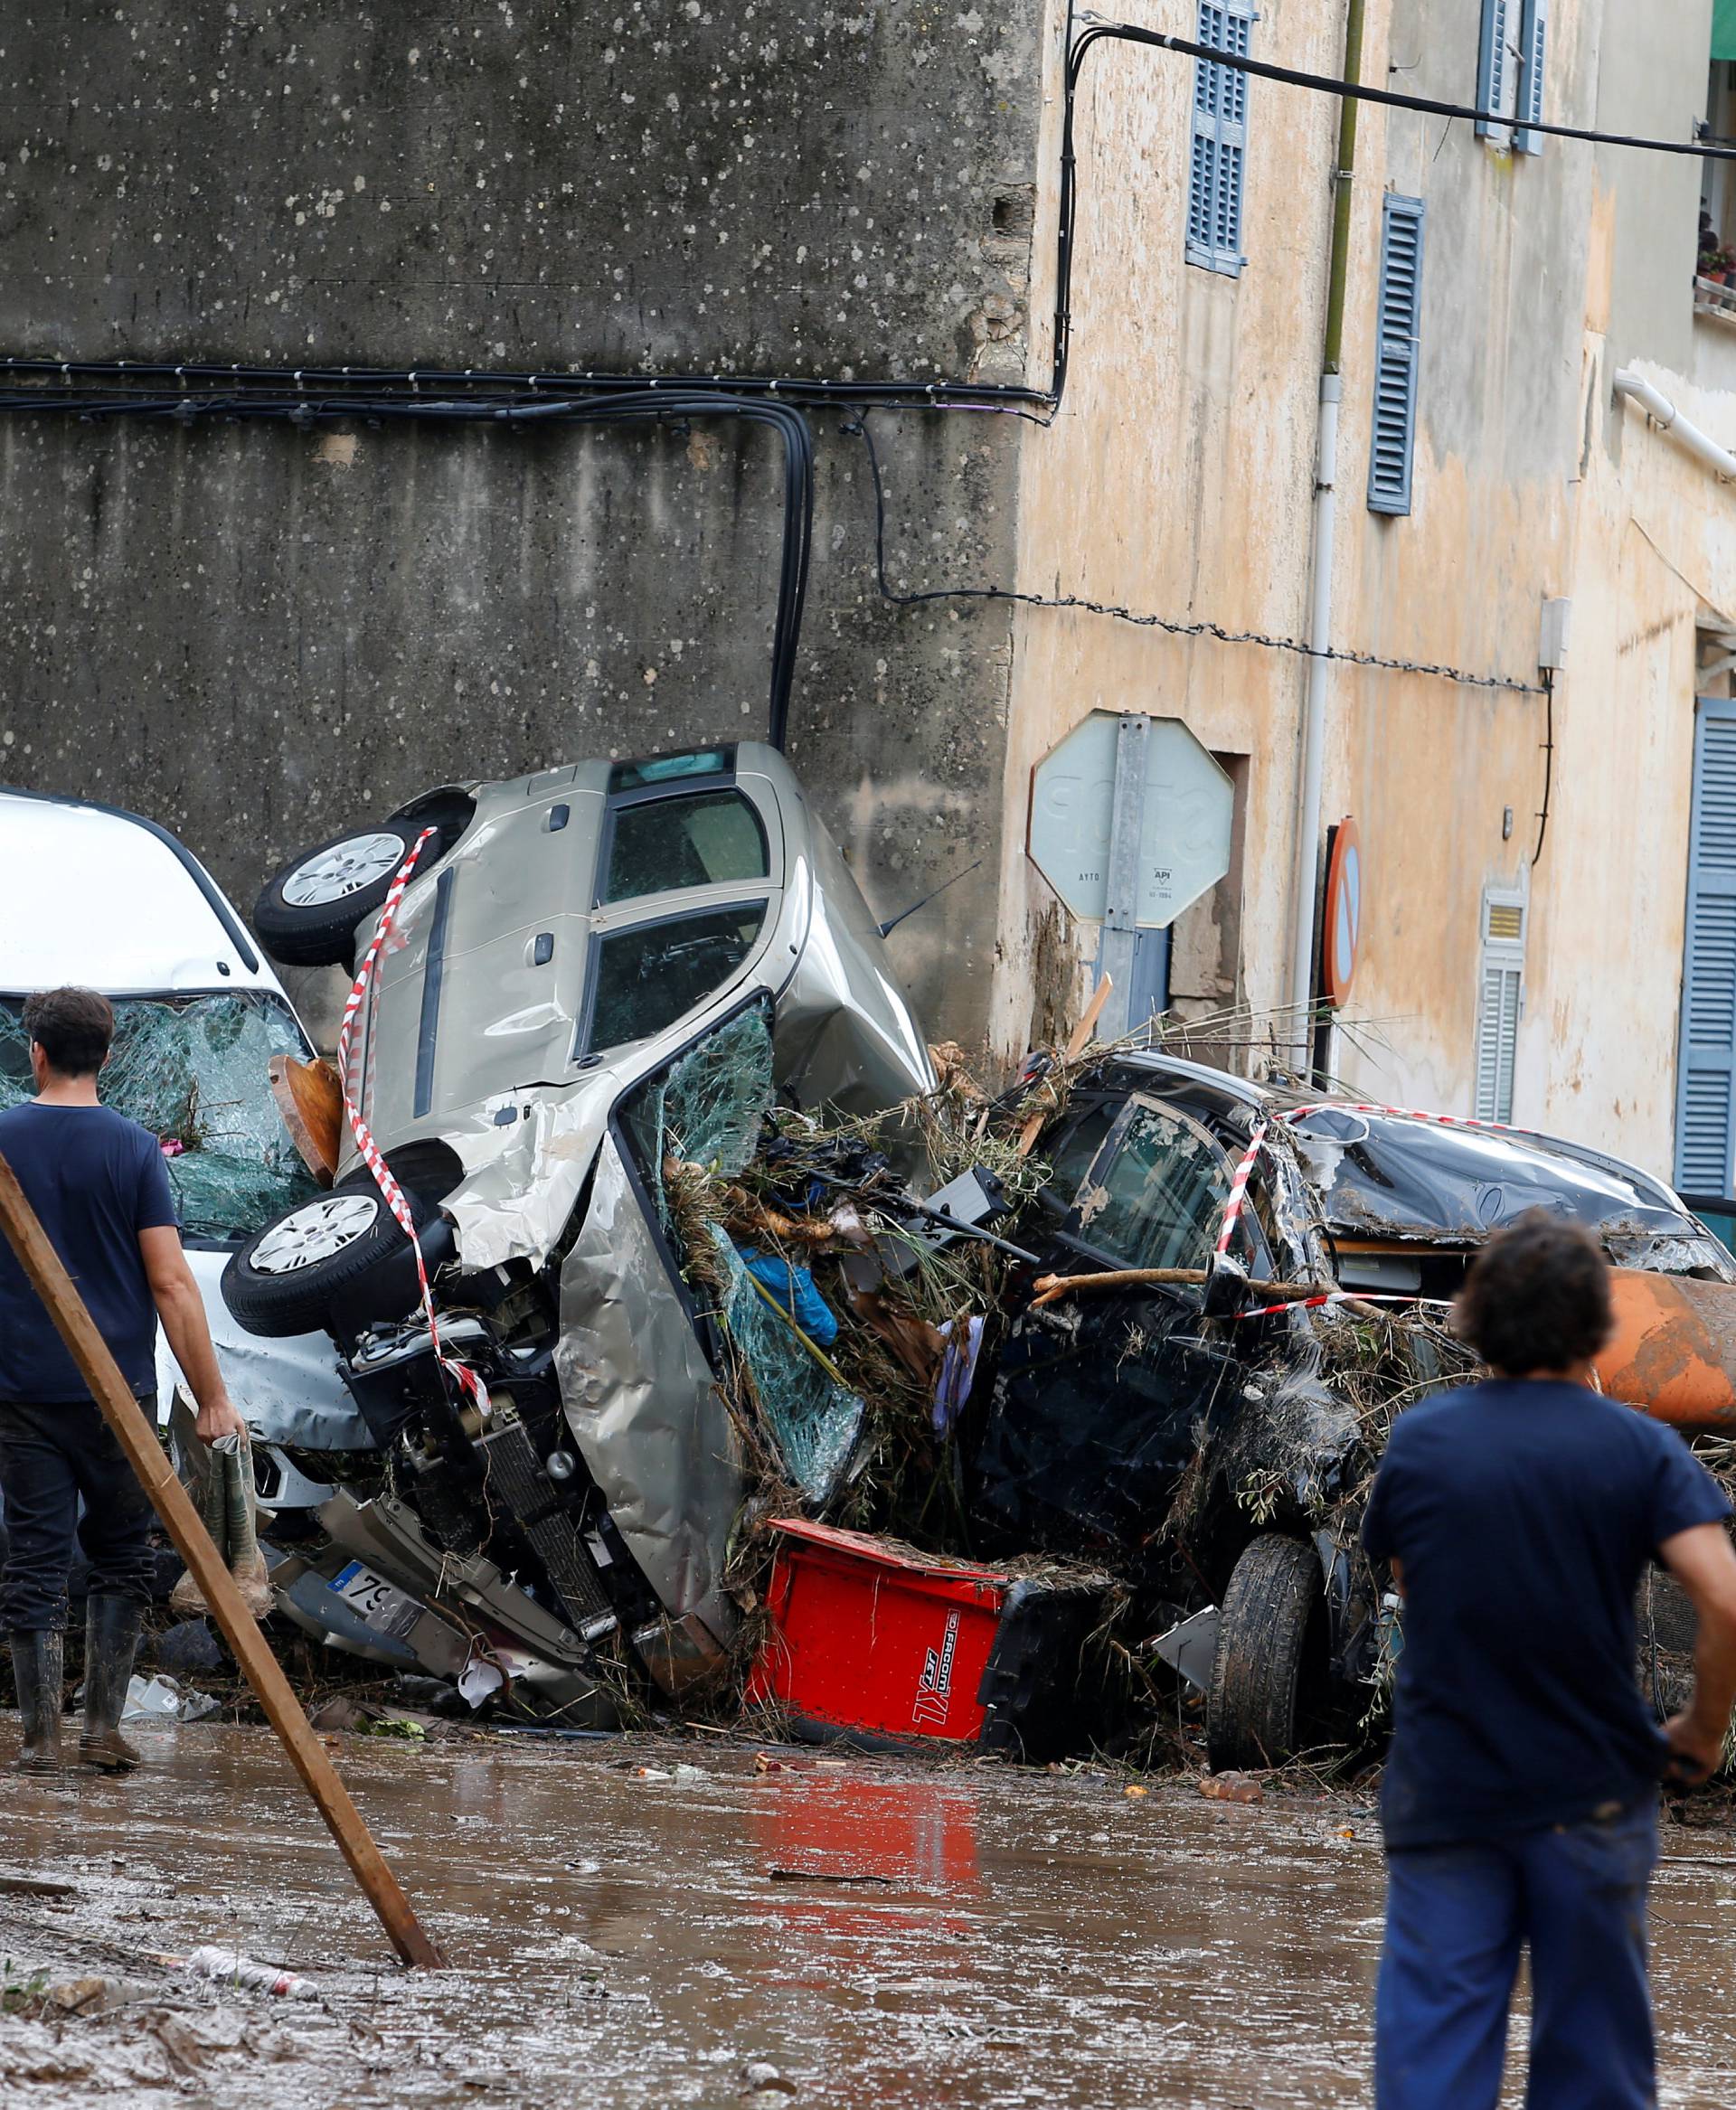 People clear debris as heavy rain and flash floods hit Sant Llorenc de Cardassar on the island of Mallorca